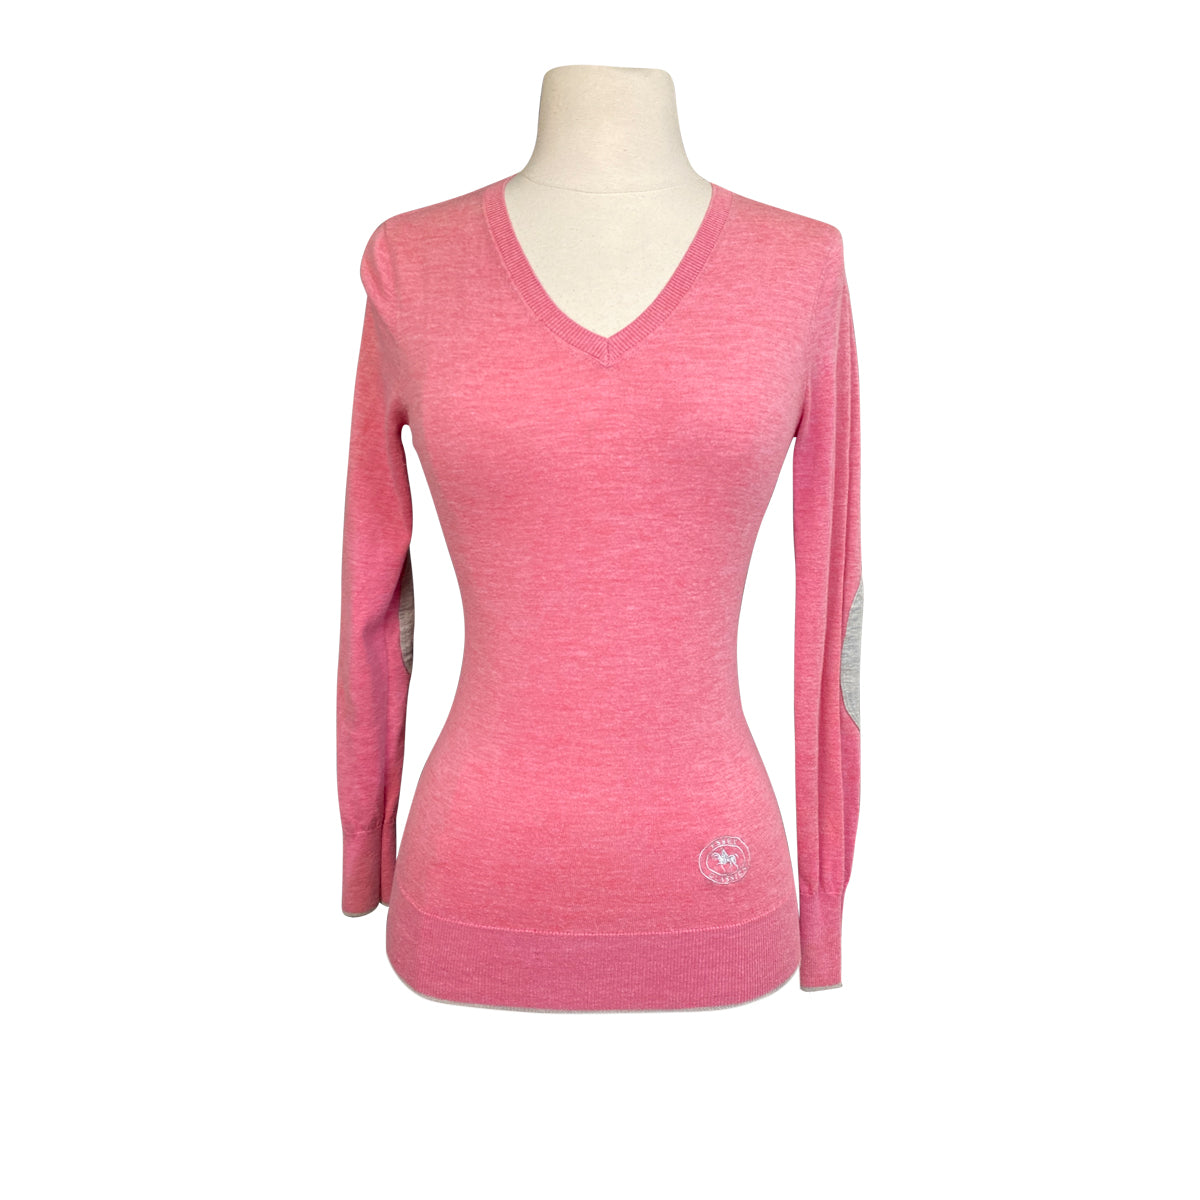 Essex Classics 'Trey' V-Neck Sweater in Pink